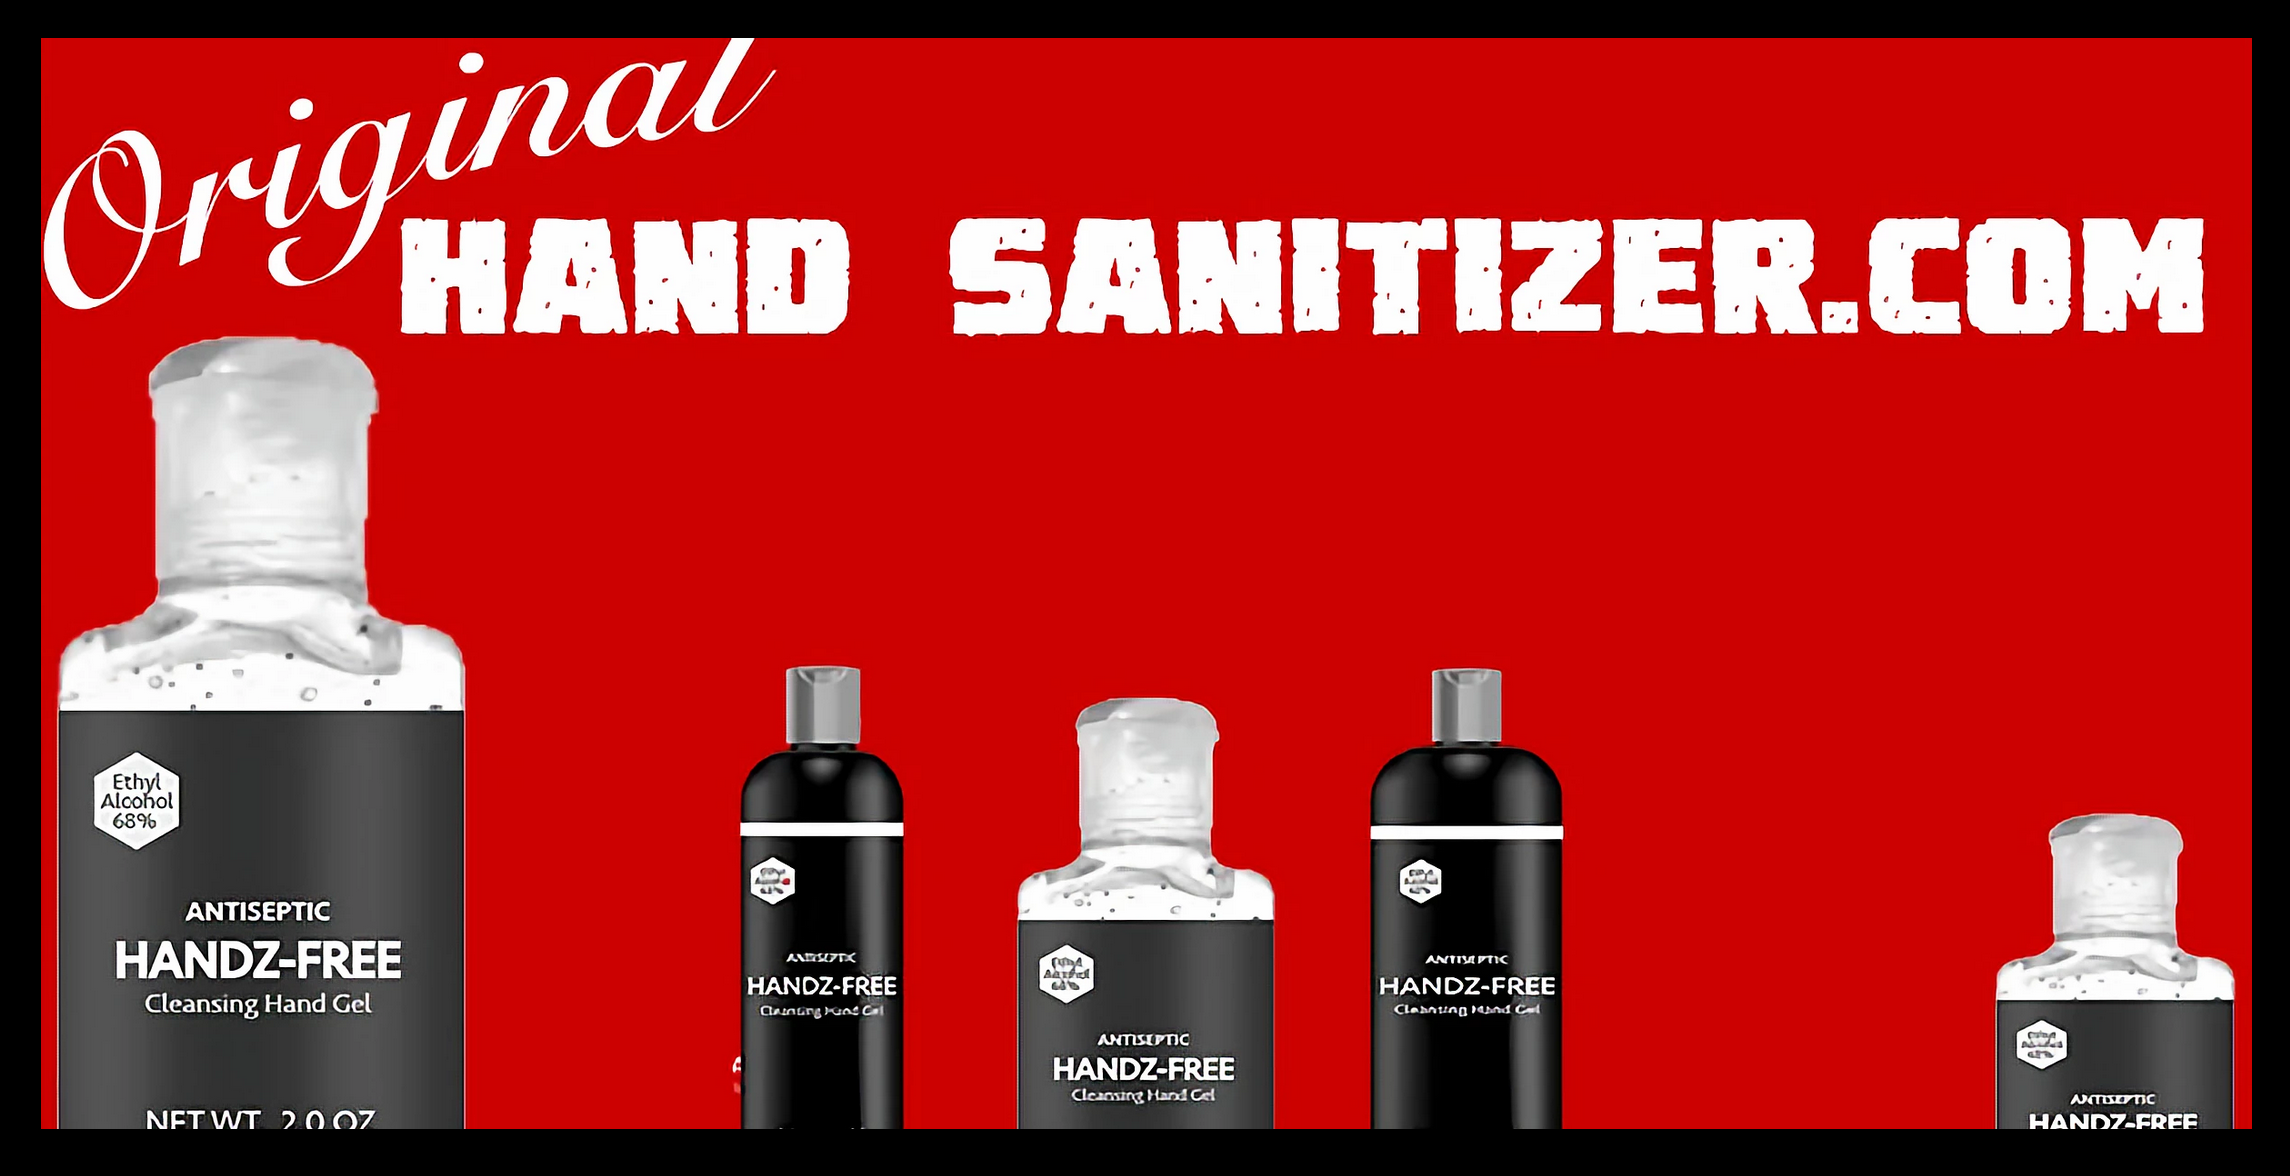 Ad for Handzfree sanitizer